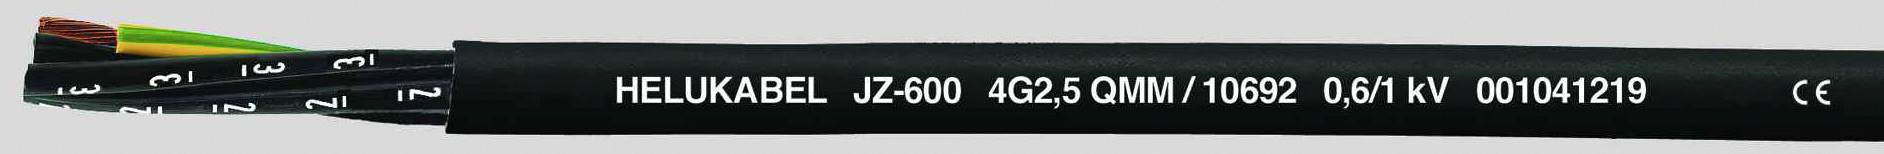 HELUKABEL JZ-600 Steuerleitung 7 G 1.50 mm² Schwarz 10664-500 500 m